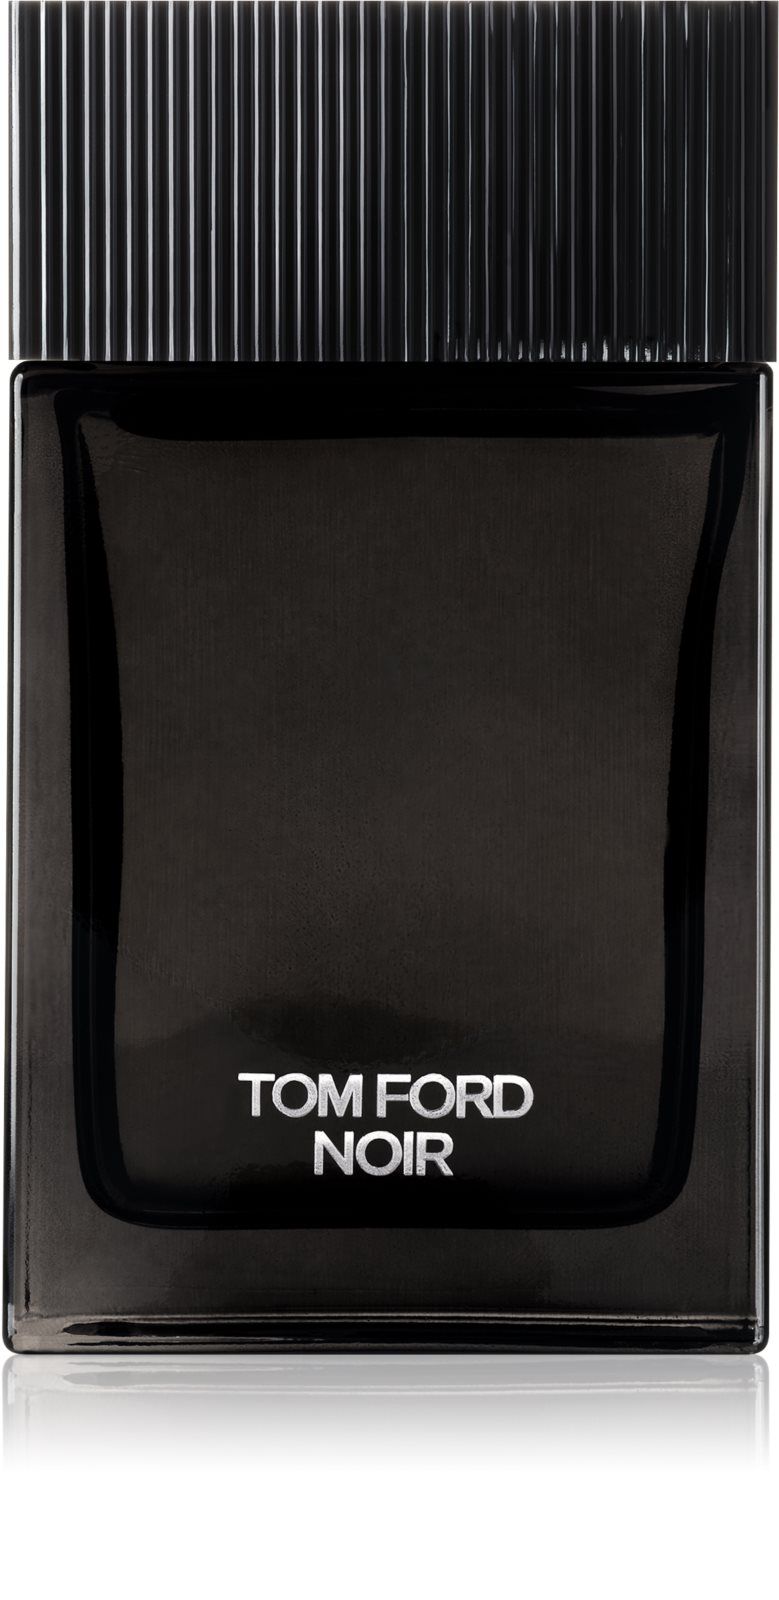 Tom Ford Noir 100ml. Парфюмерная вода Tom Ford Noir. Туалетная вода том Форд мужская Ноир. Ноир том Форд 2. Мужская вода noir